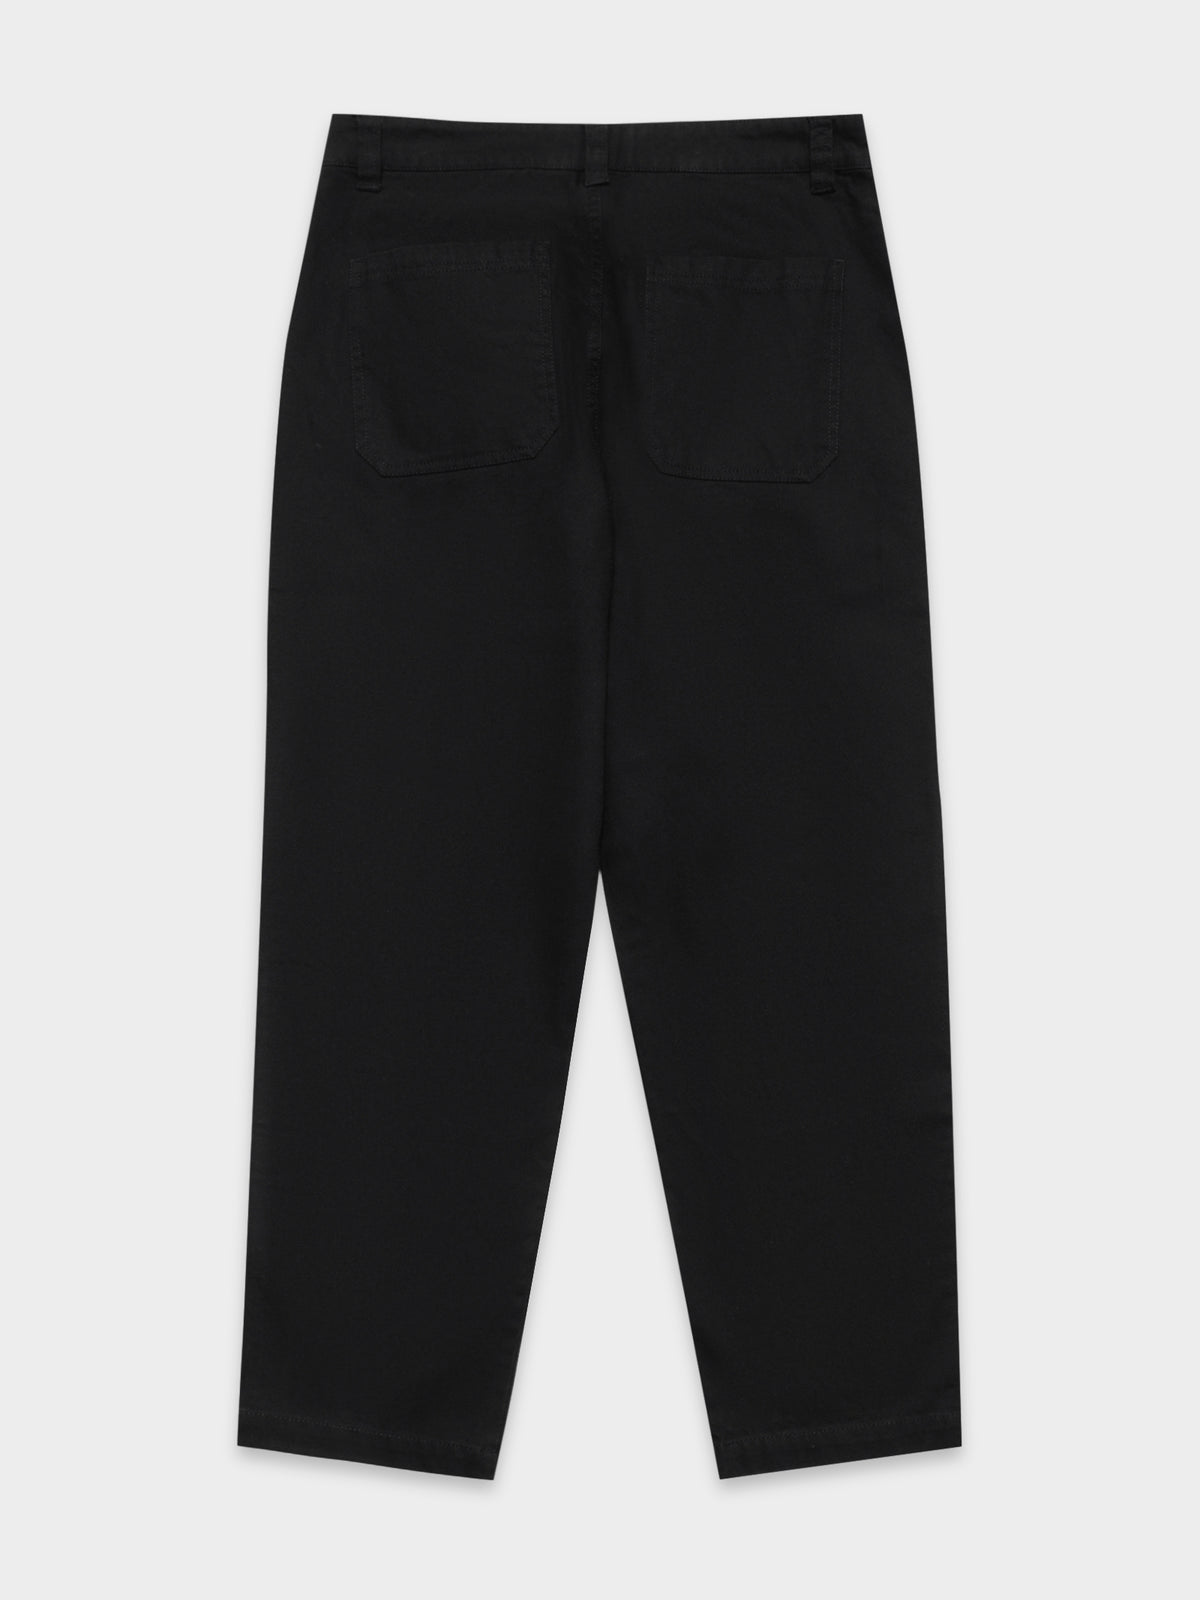 Benzo Pants in Black